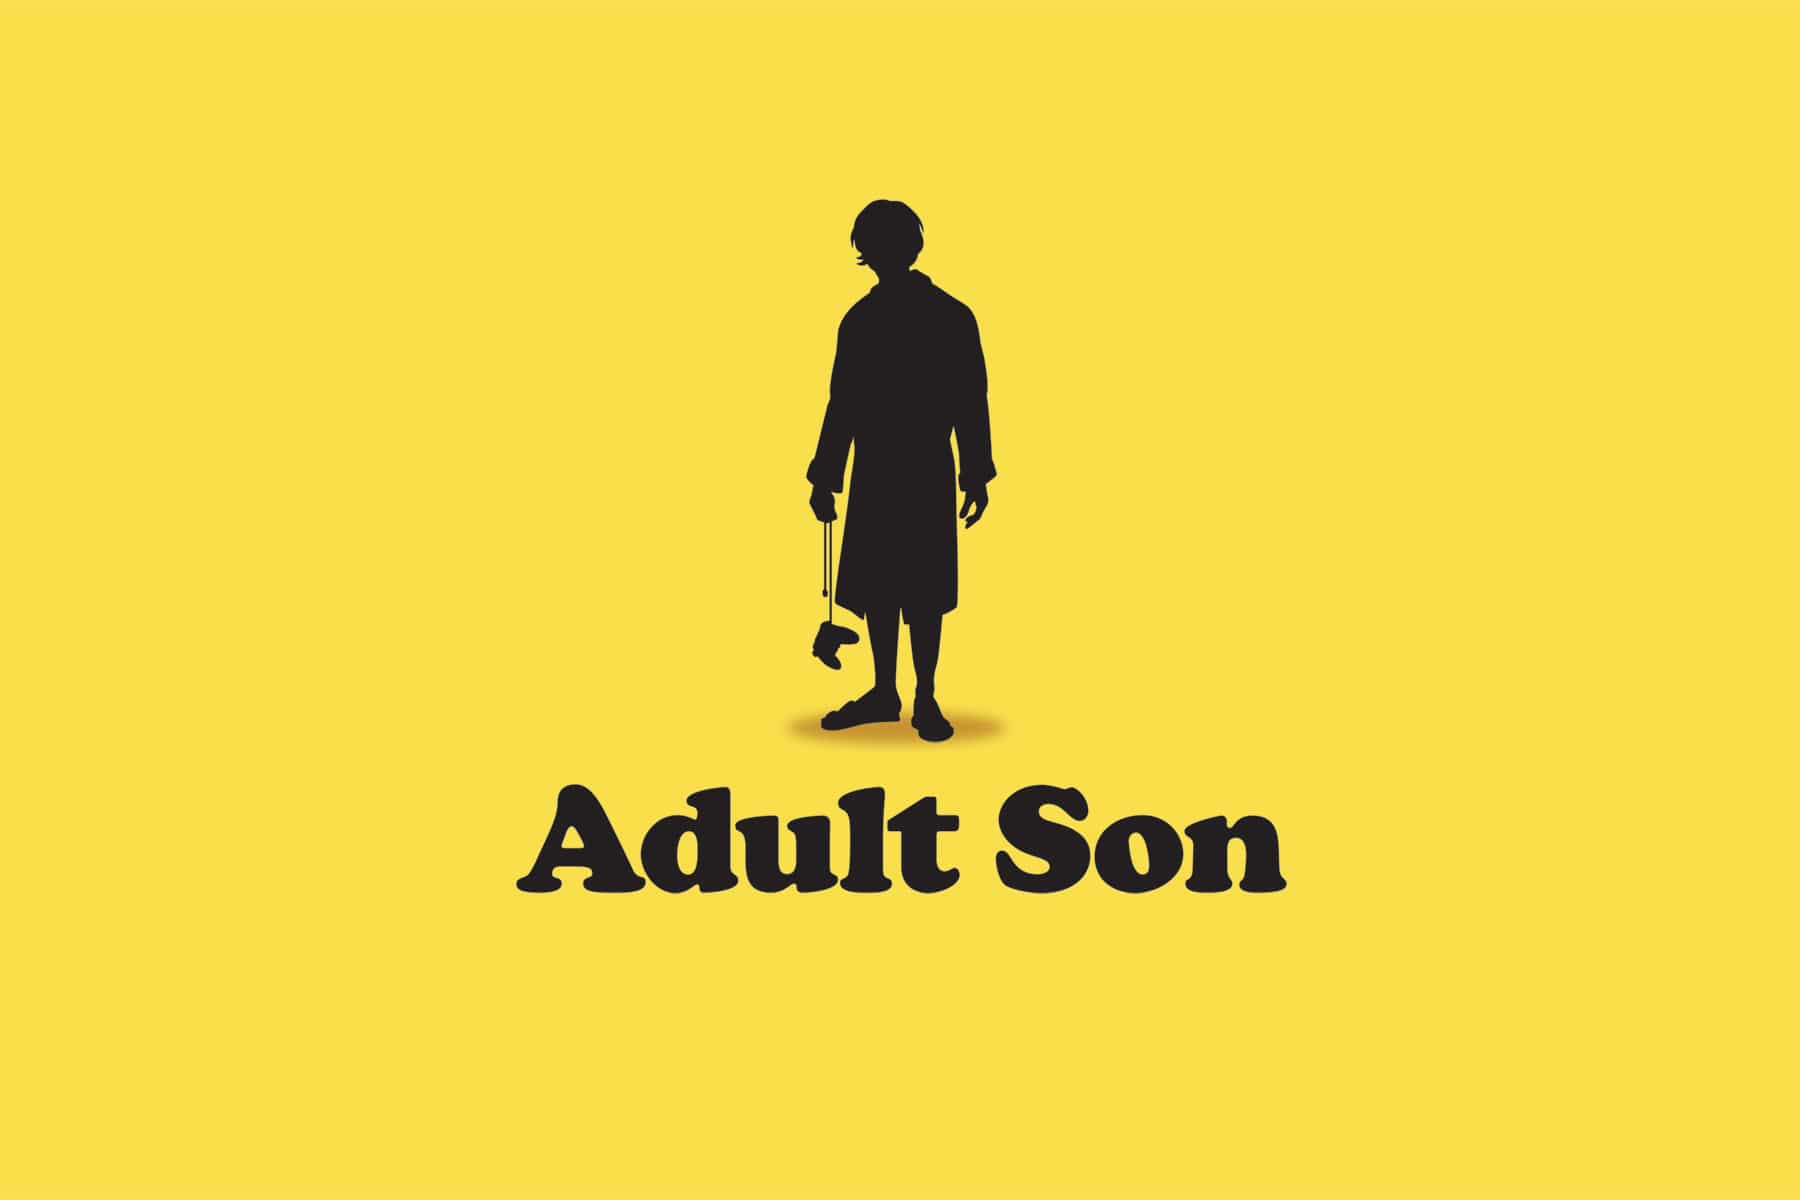 Adult Son Vanity Card Animation